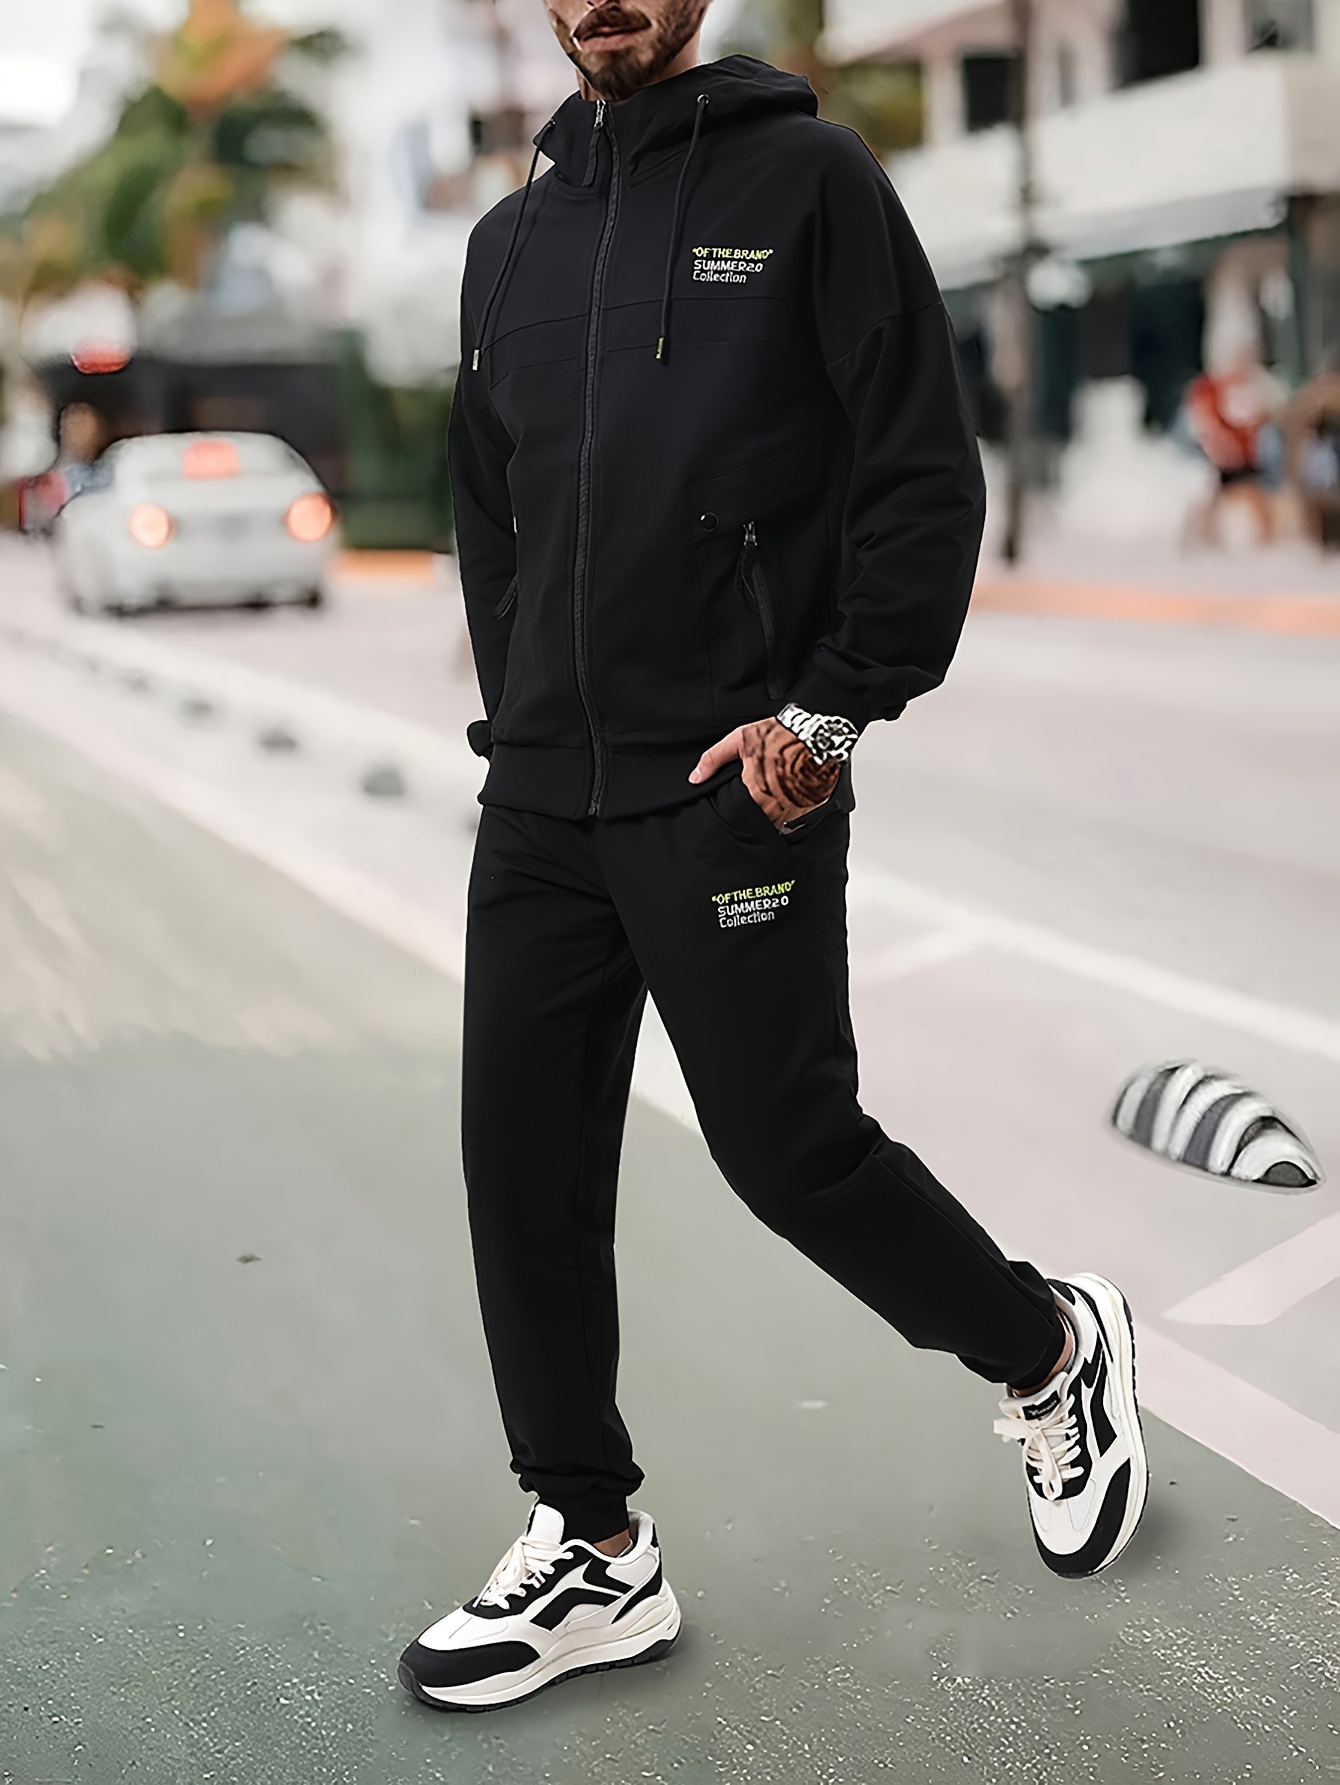 SAMST Men's Casual 2 Piece Outfits Hoodie Sweatshirt Tracksuit Joggers  Sweatpants Sweatsuit Set Jogging Athletic Suits(Black,S) at  Men's  Clothing store